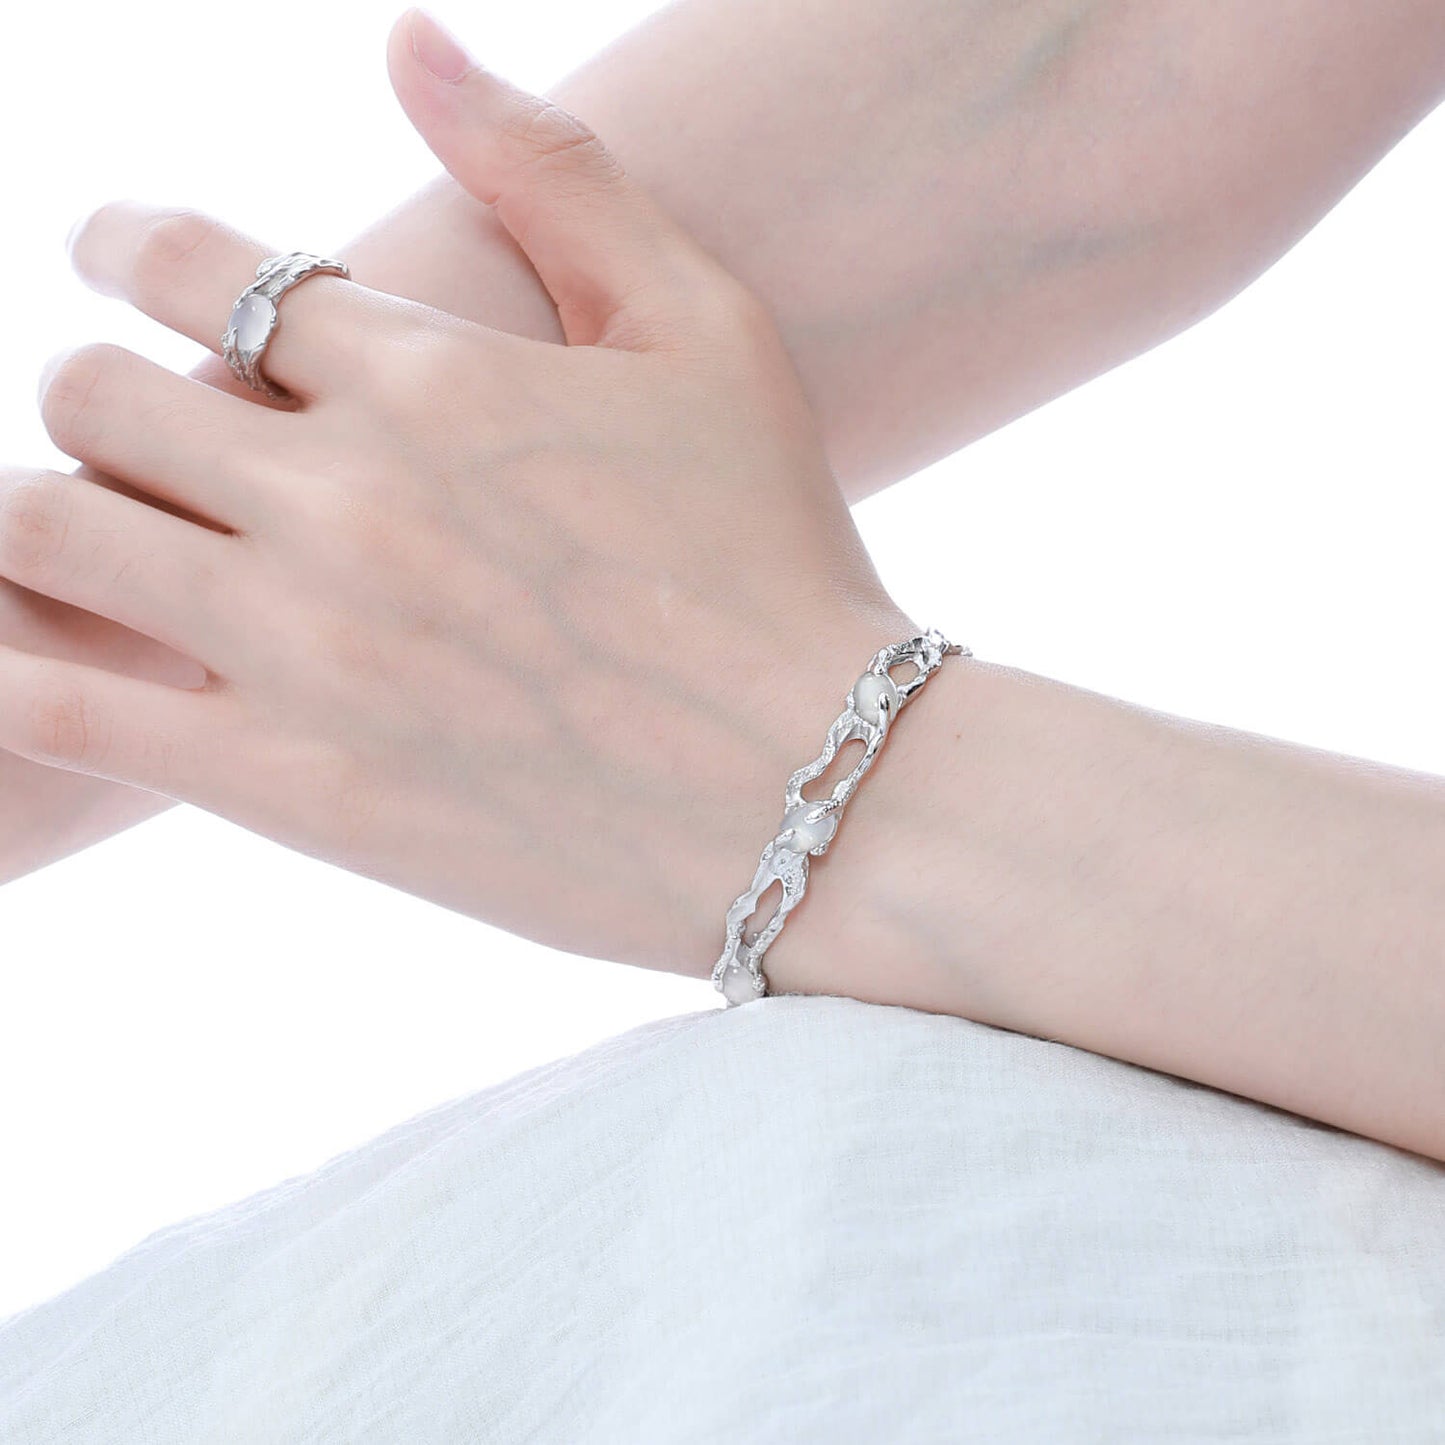 White Agate-Inlaid Beaded Bracelet  Buy at Khanie